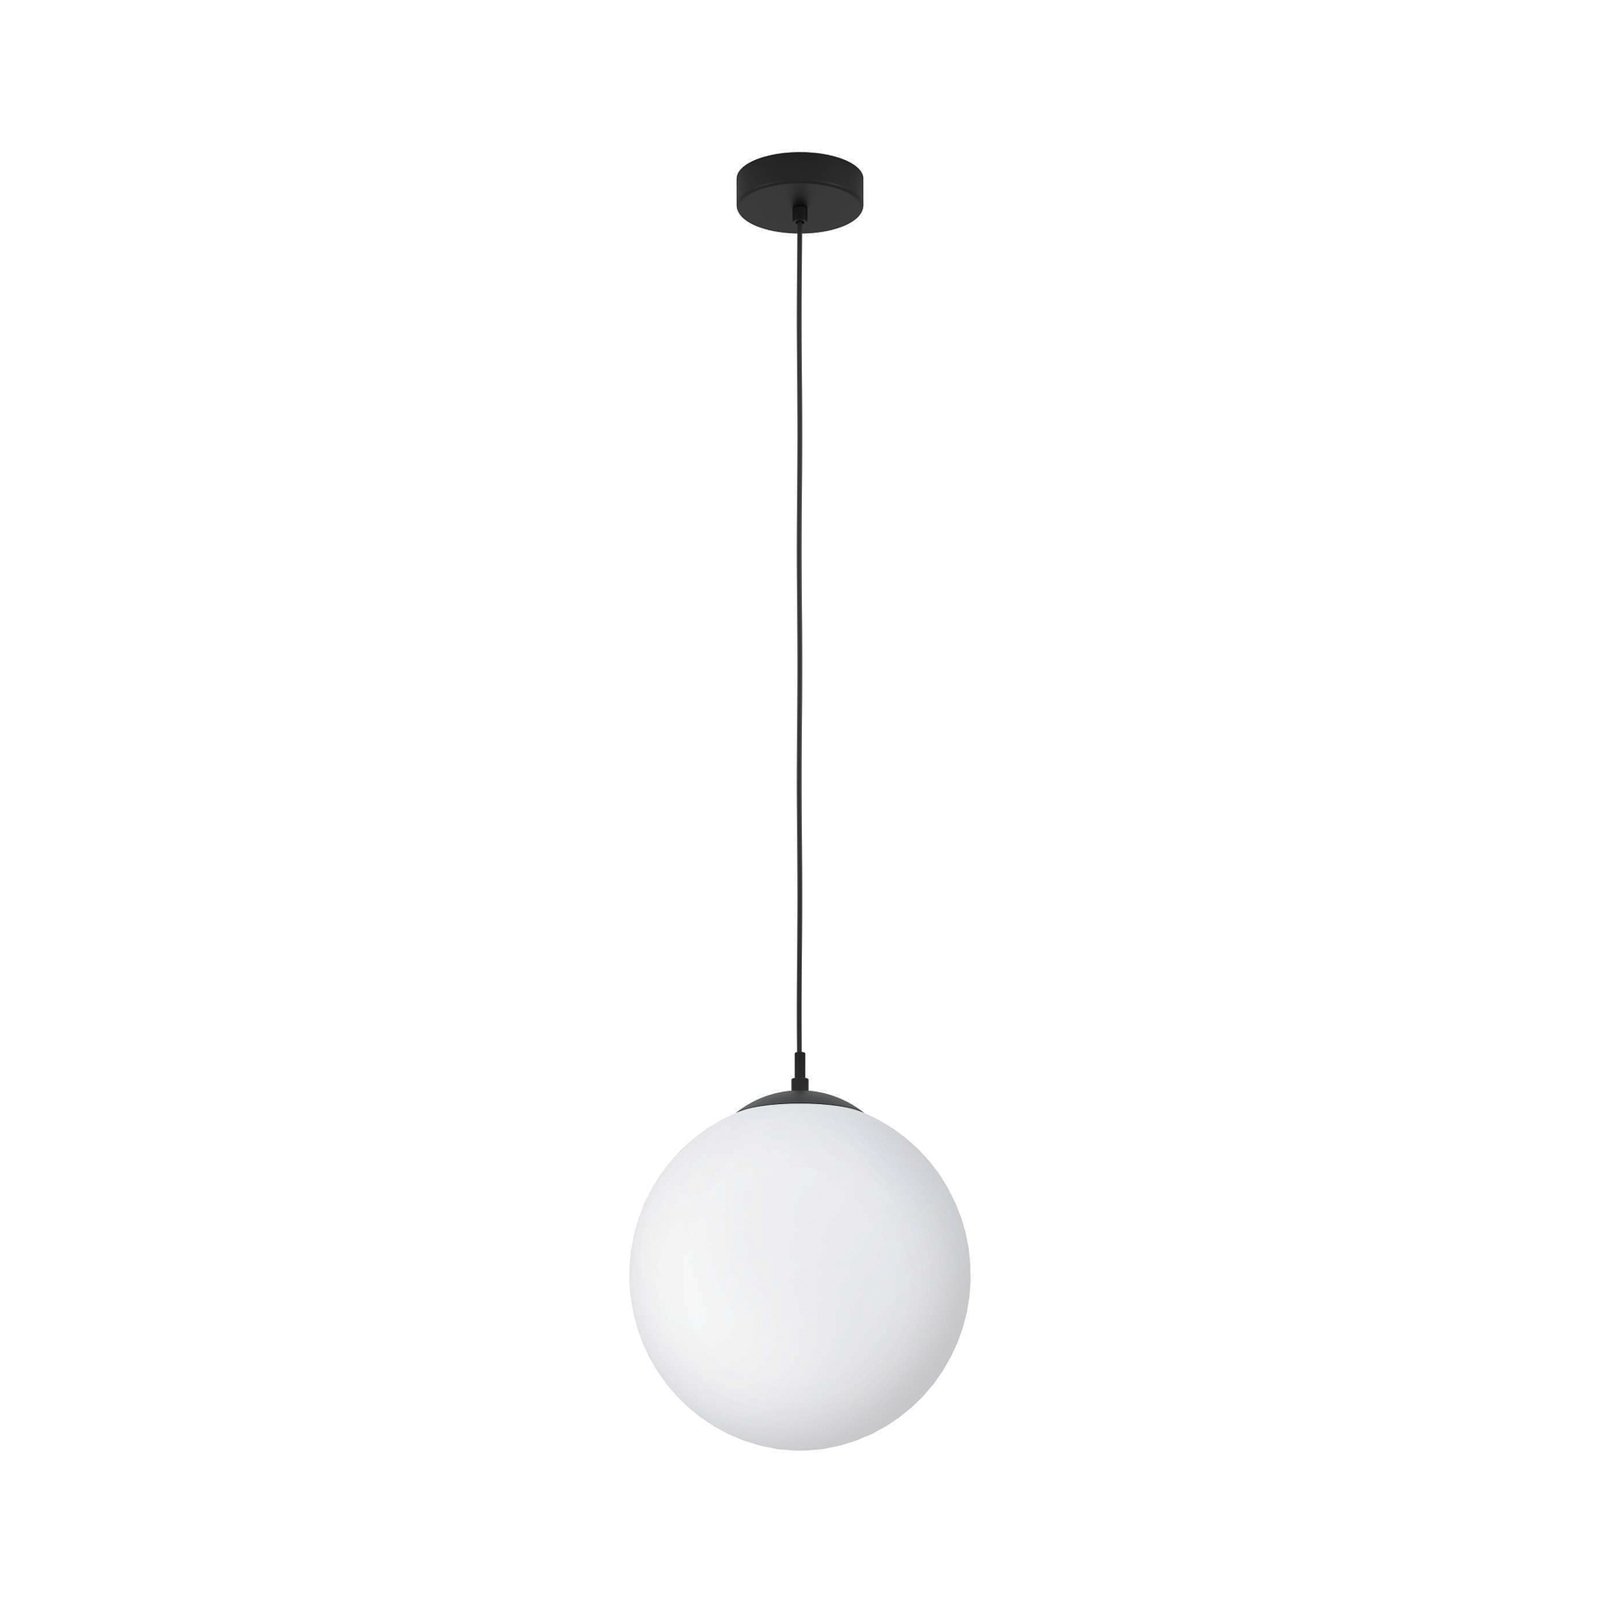 Hanglamp Rondo 3, Ø 30cm, zwart